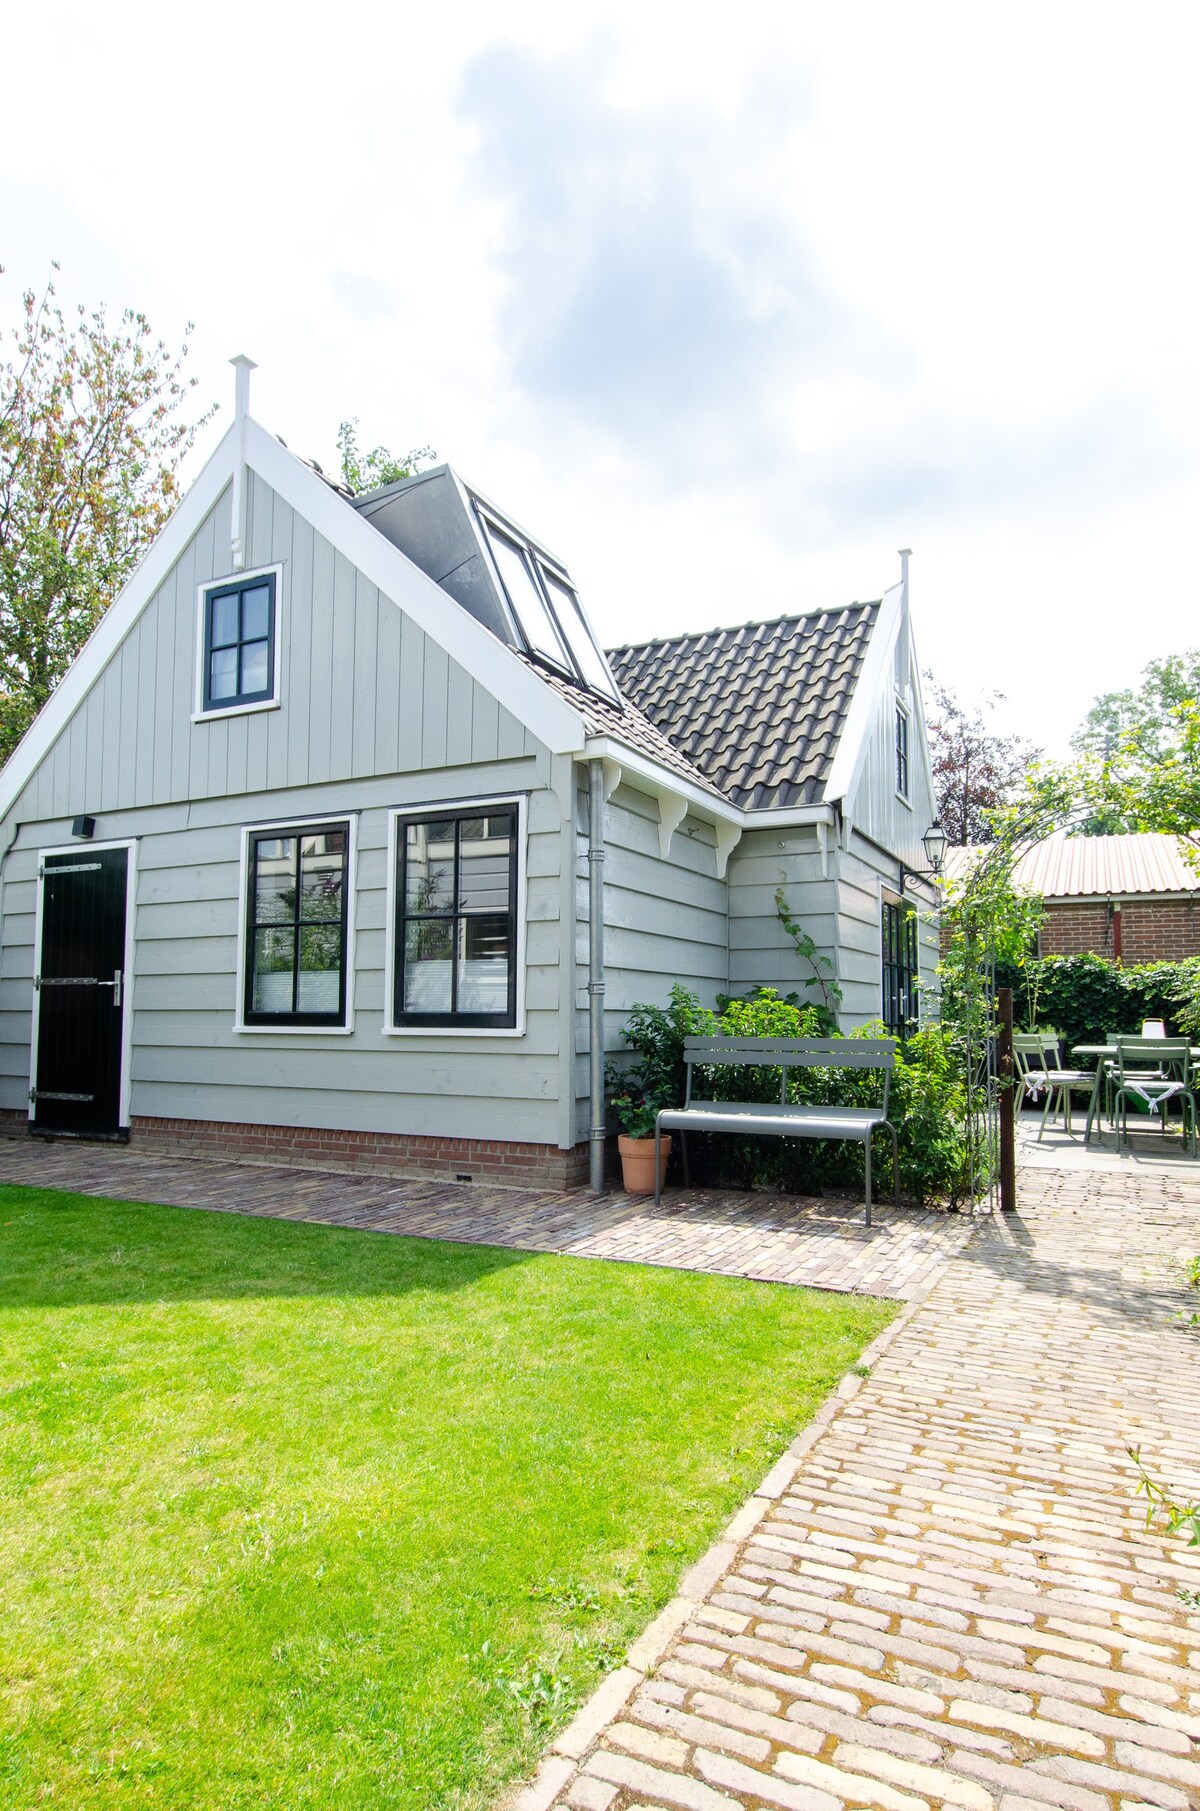 Broek in Waterland Vacation Rentals & Homes - North Holland, Netherlands |  Airbnb